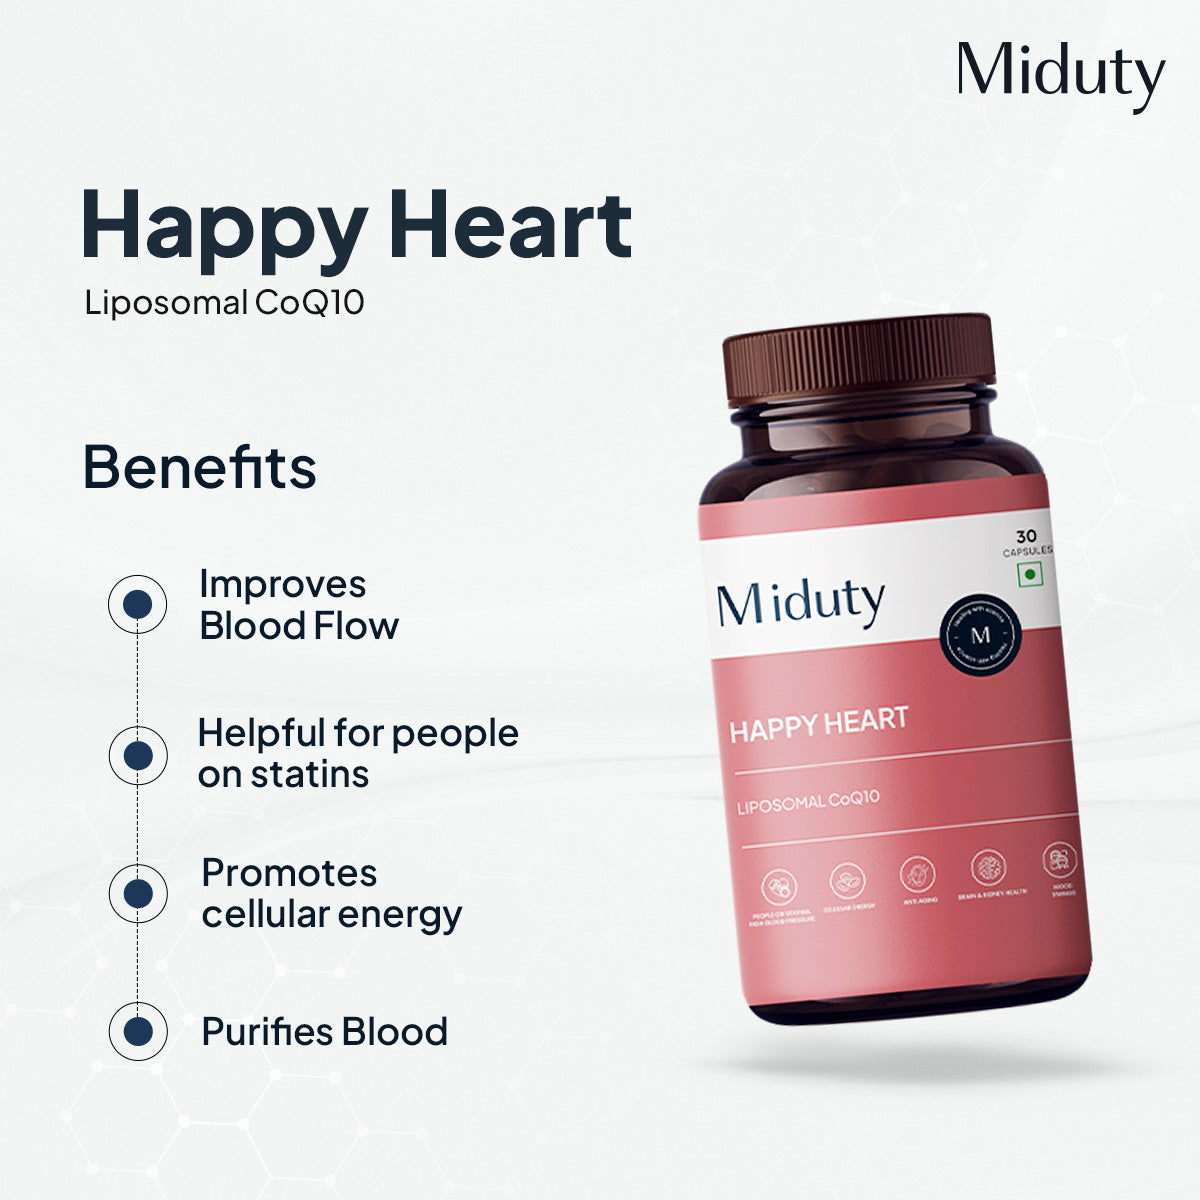 Happy Heart - Liposomal CoQ10 - Miduty